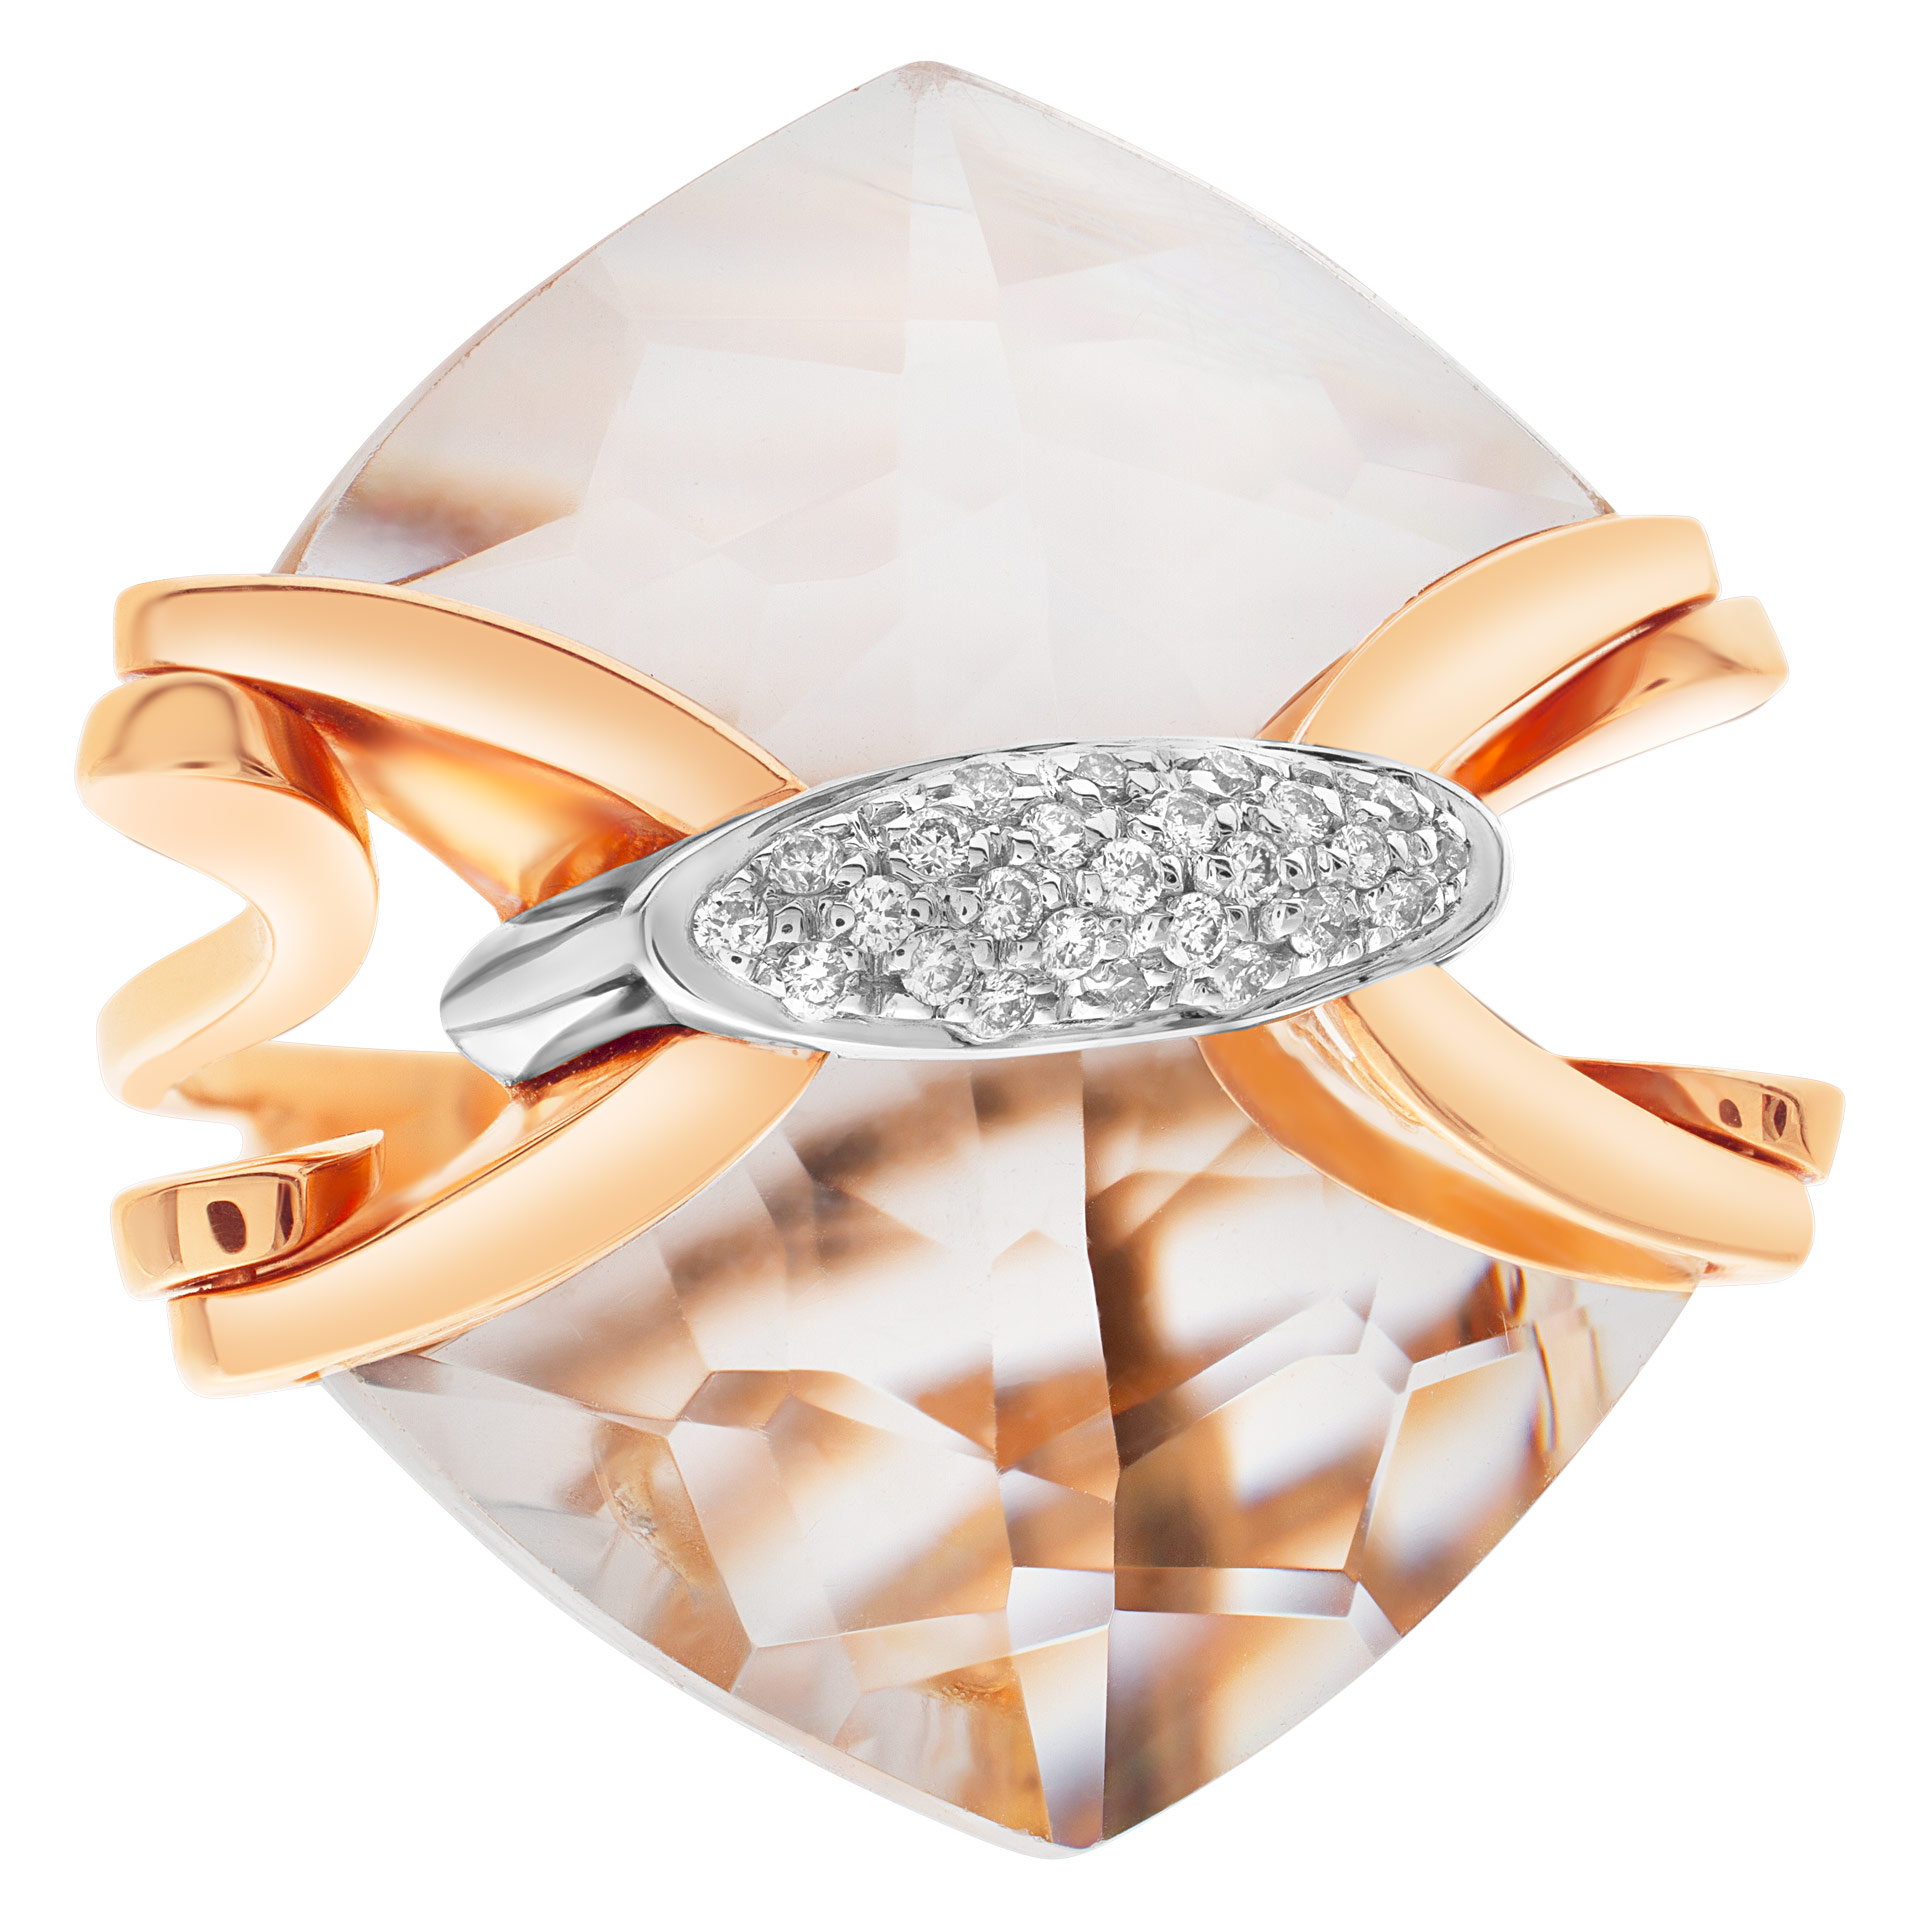 Mesmerizing quartz & diamonds ring by Italian designer "Falcinelli", w 17 carats "arrow"  shape cut quartz & diamonds. image 1